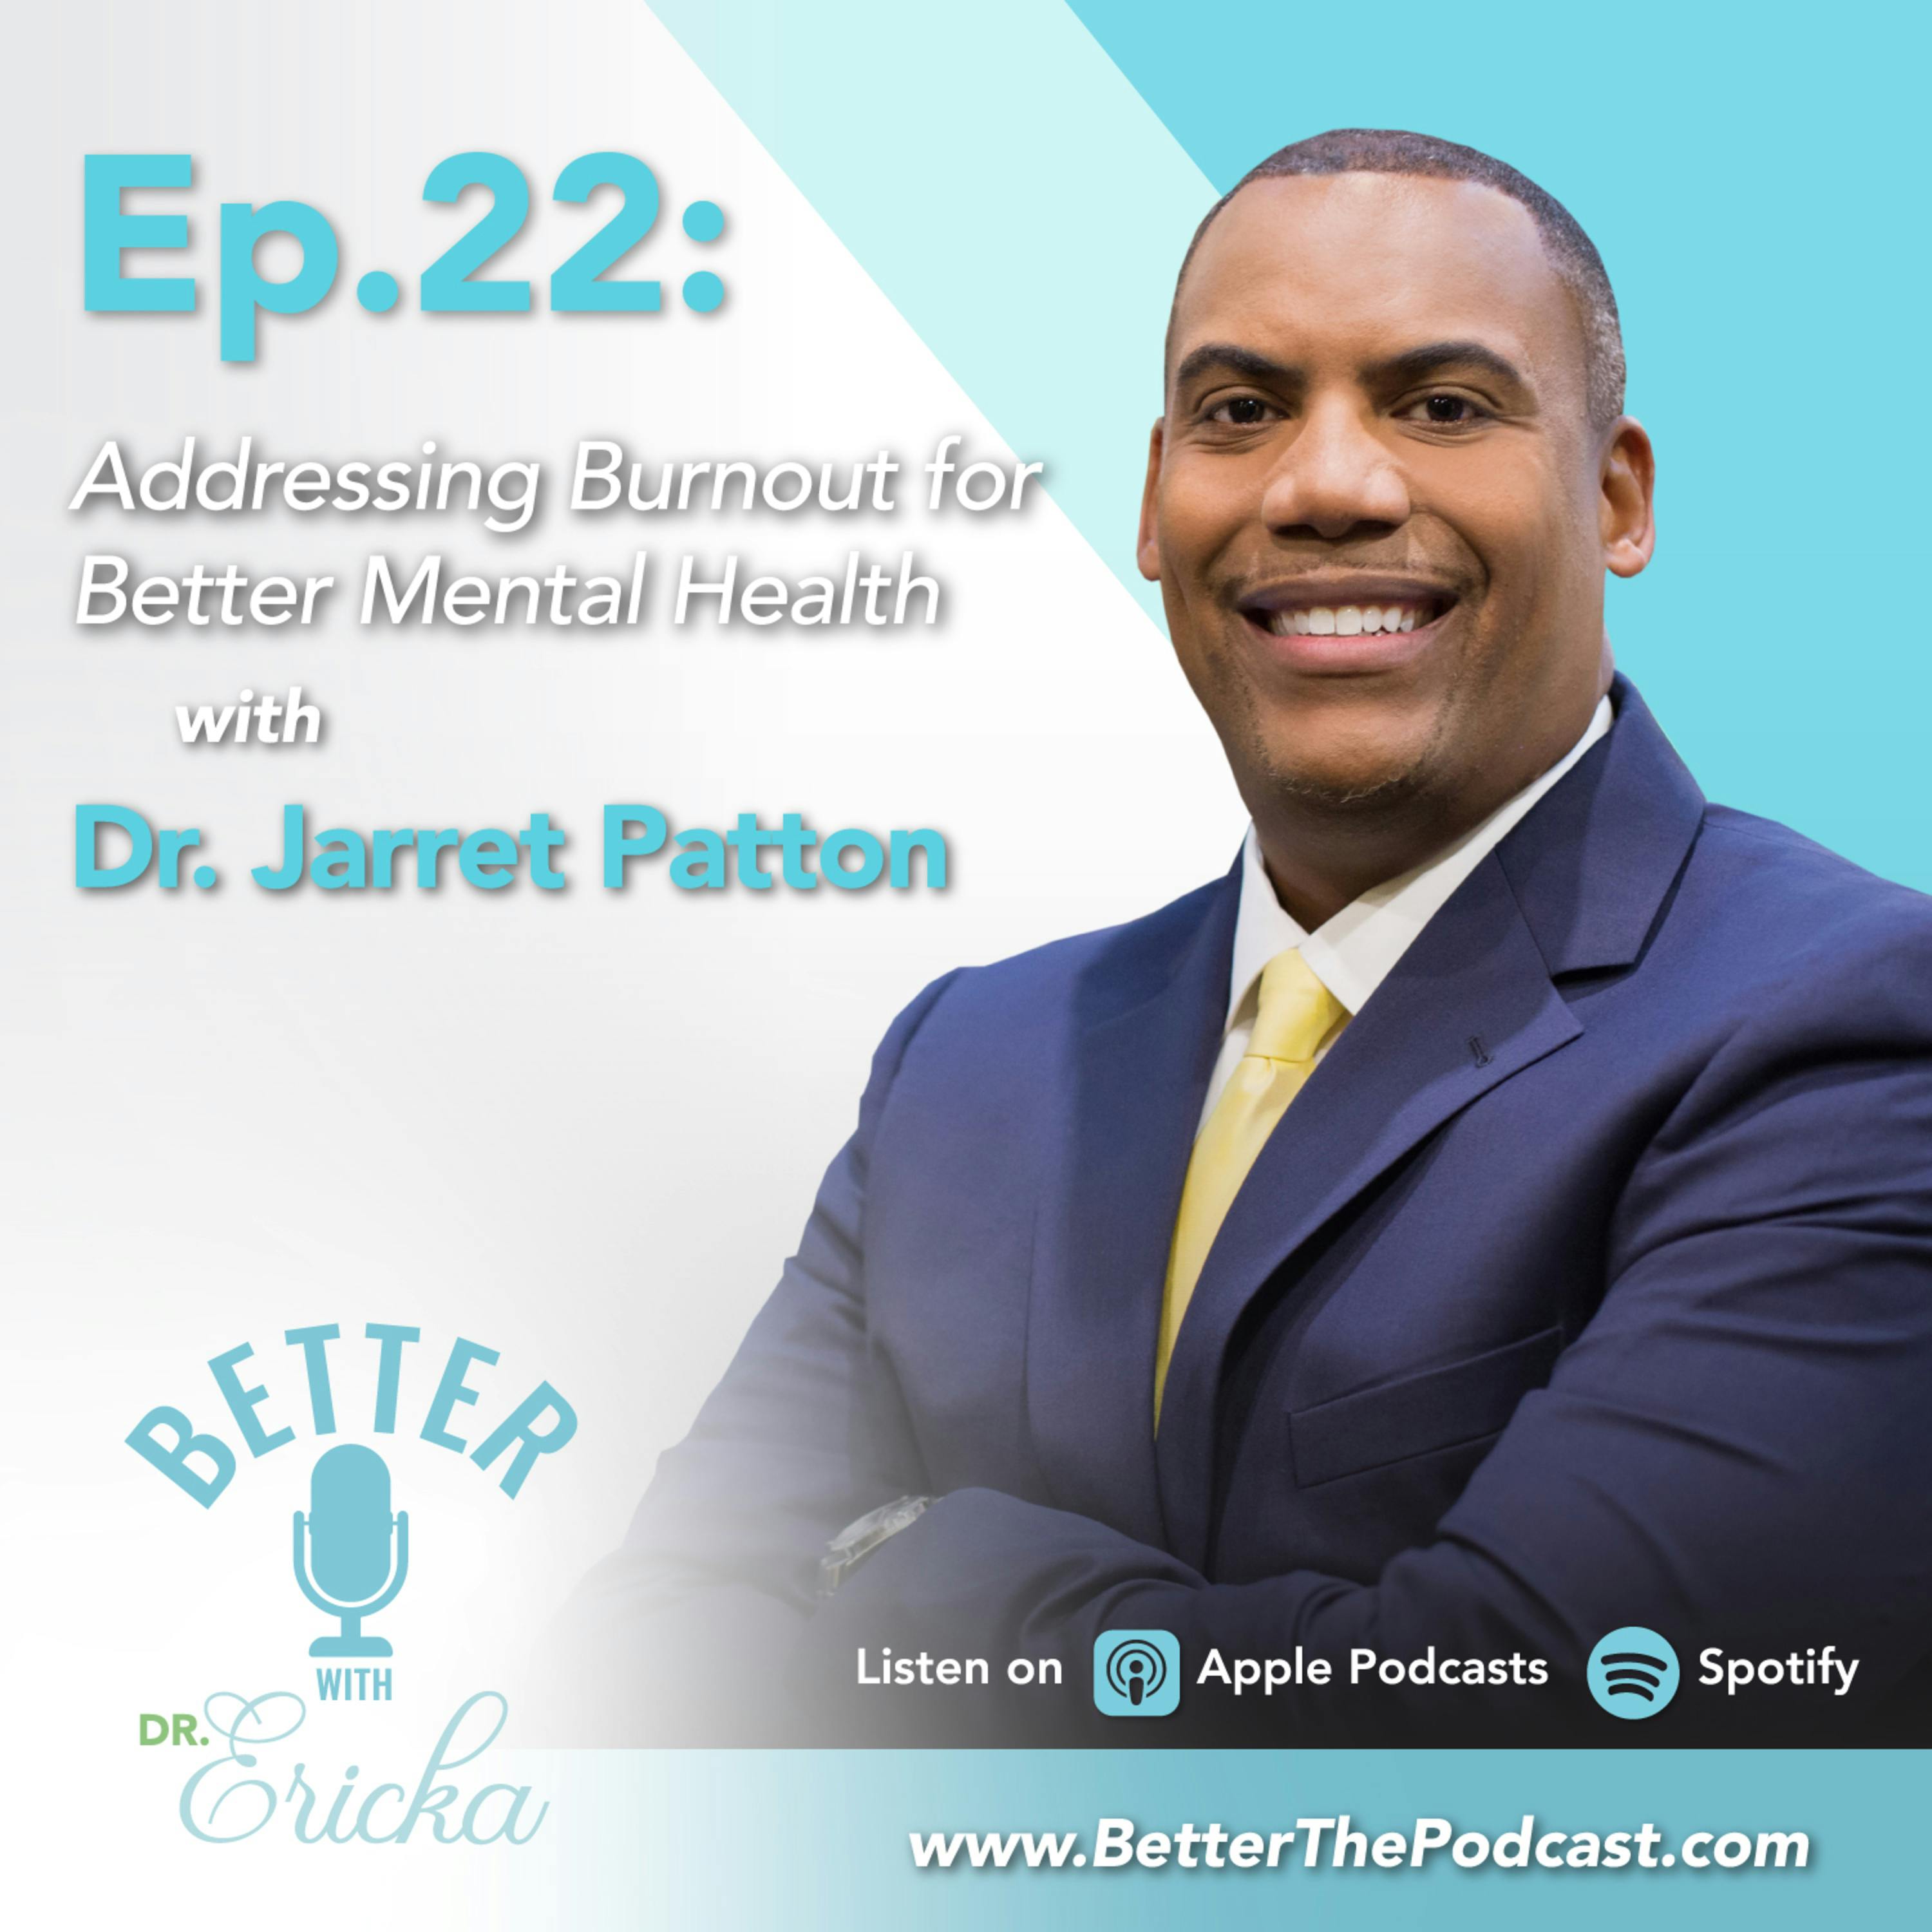 Addressing Burnout for Better Mental Health with Dr. Jarret Patton